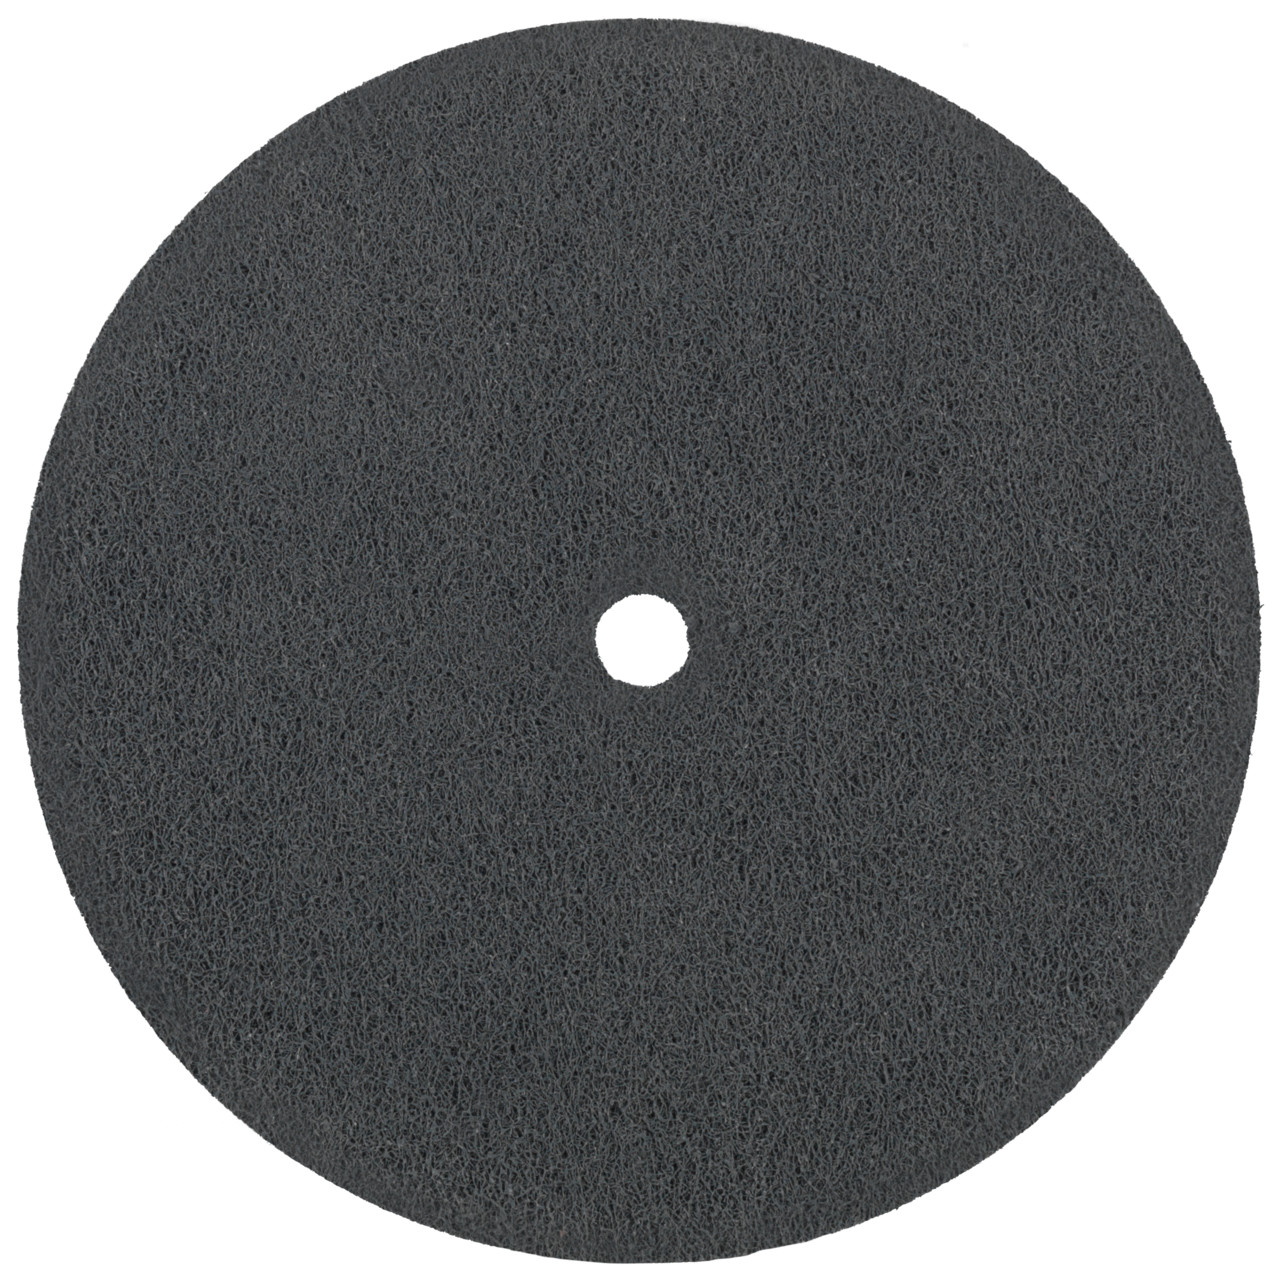 Tyrolit Compact disc pressati DxDxH 152x25x25.4 Inserto universale, 6 C FEIN, forma: 1, Art. 34190309